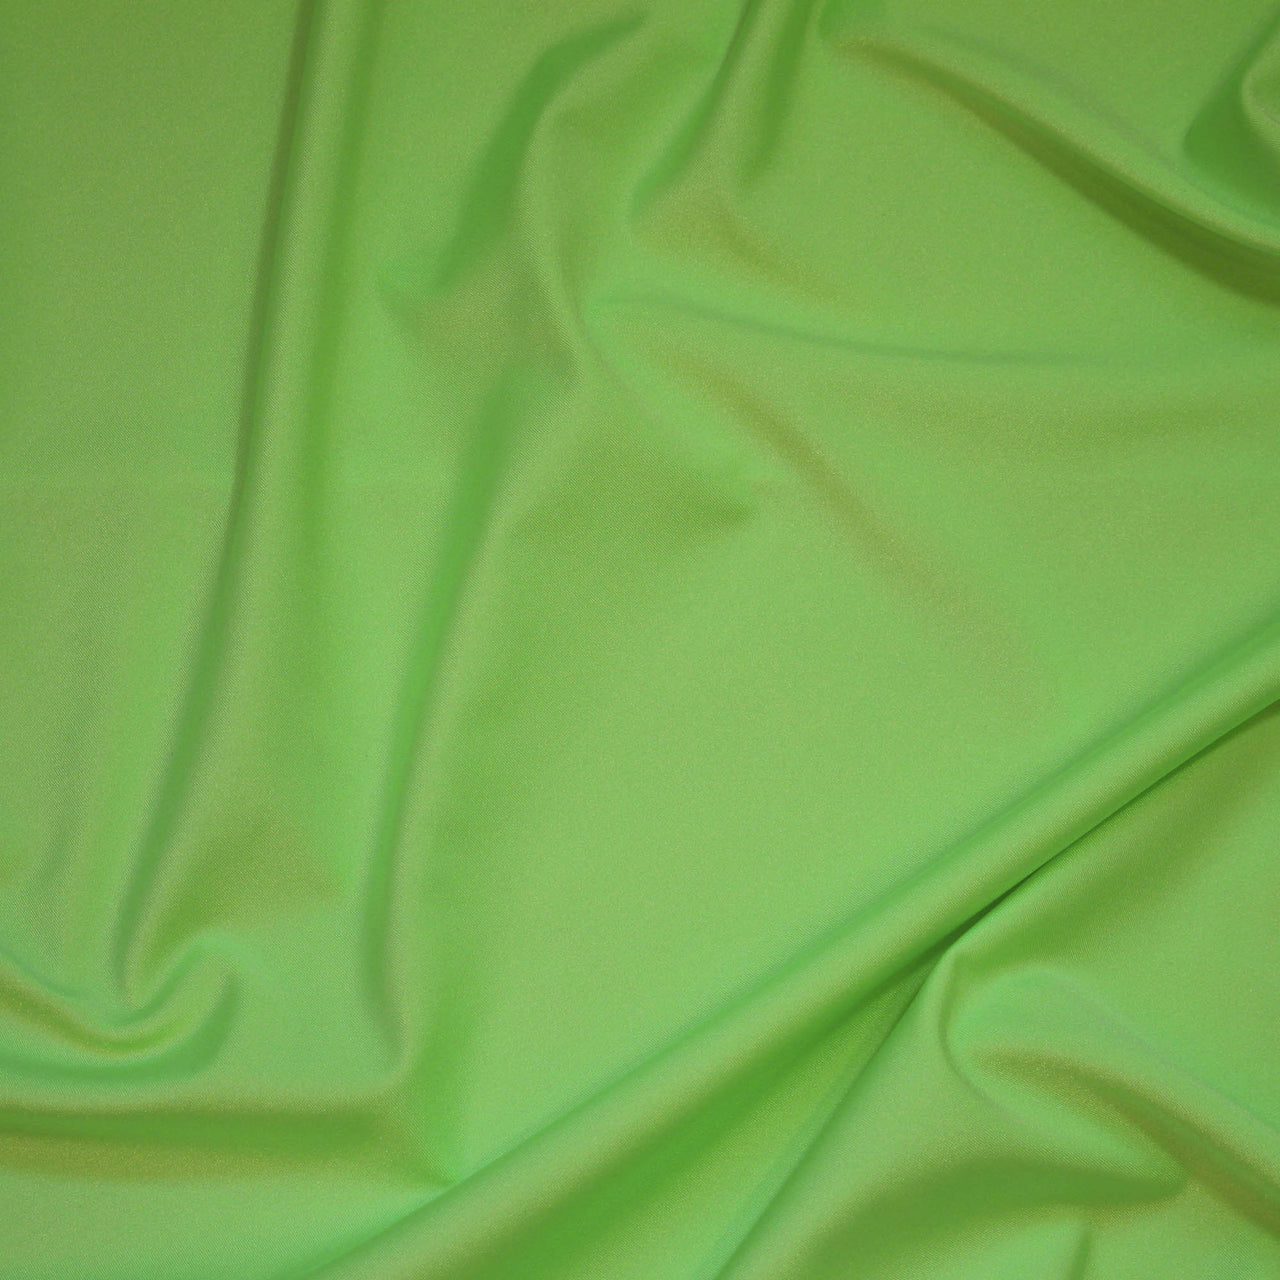 Flourescent Green - Nylon Spandex Fabric - 4 Way All Way Stretch Superior Quality - Leotards, Dancewear